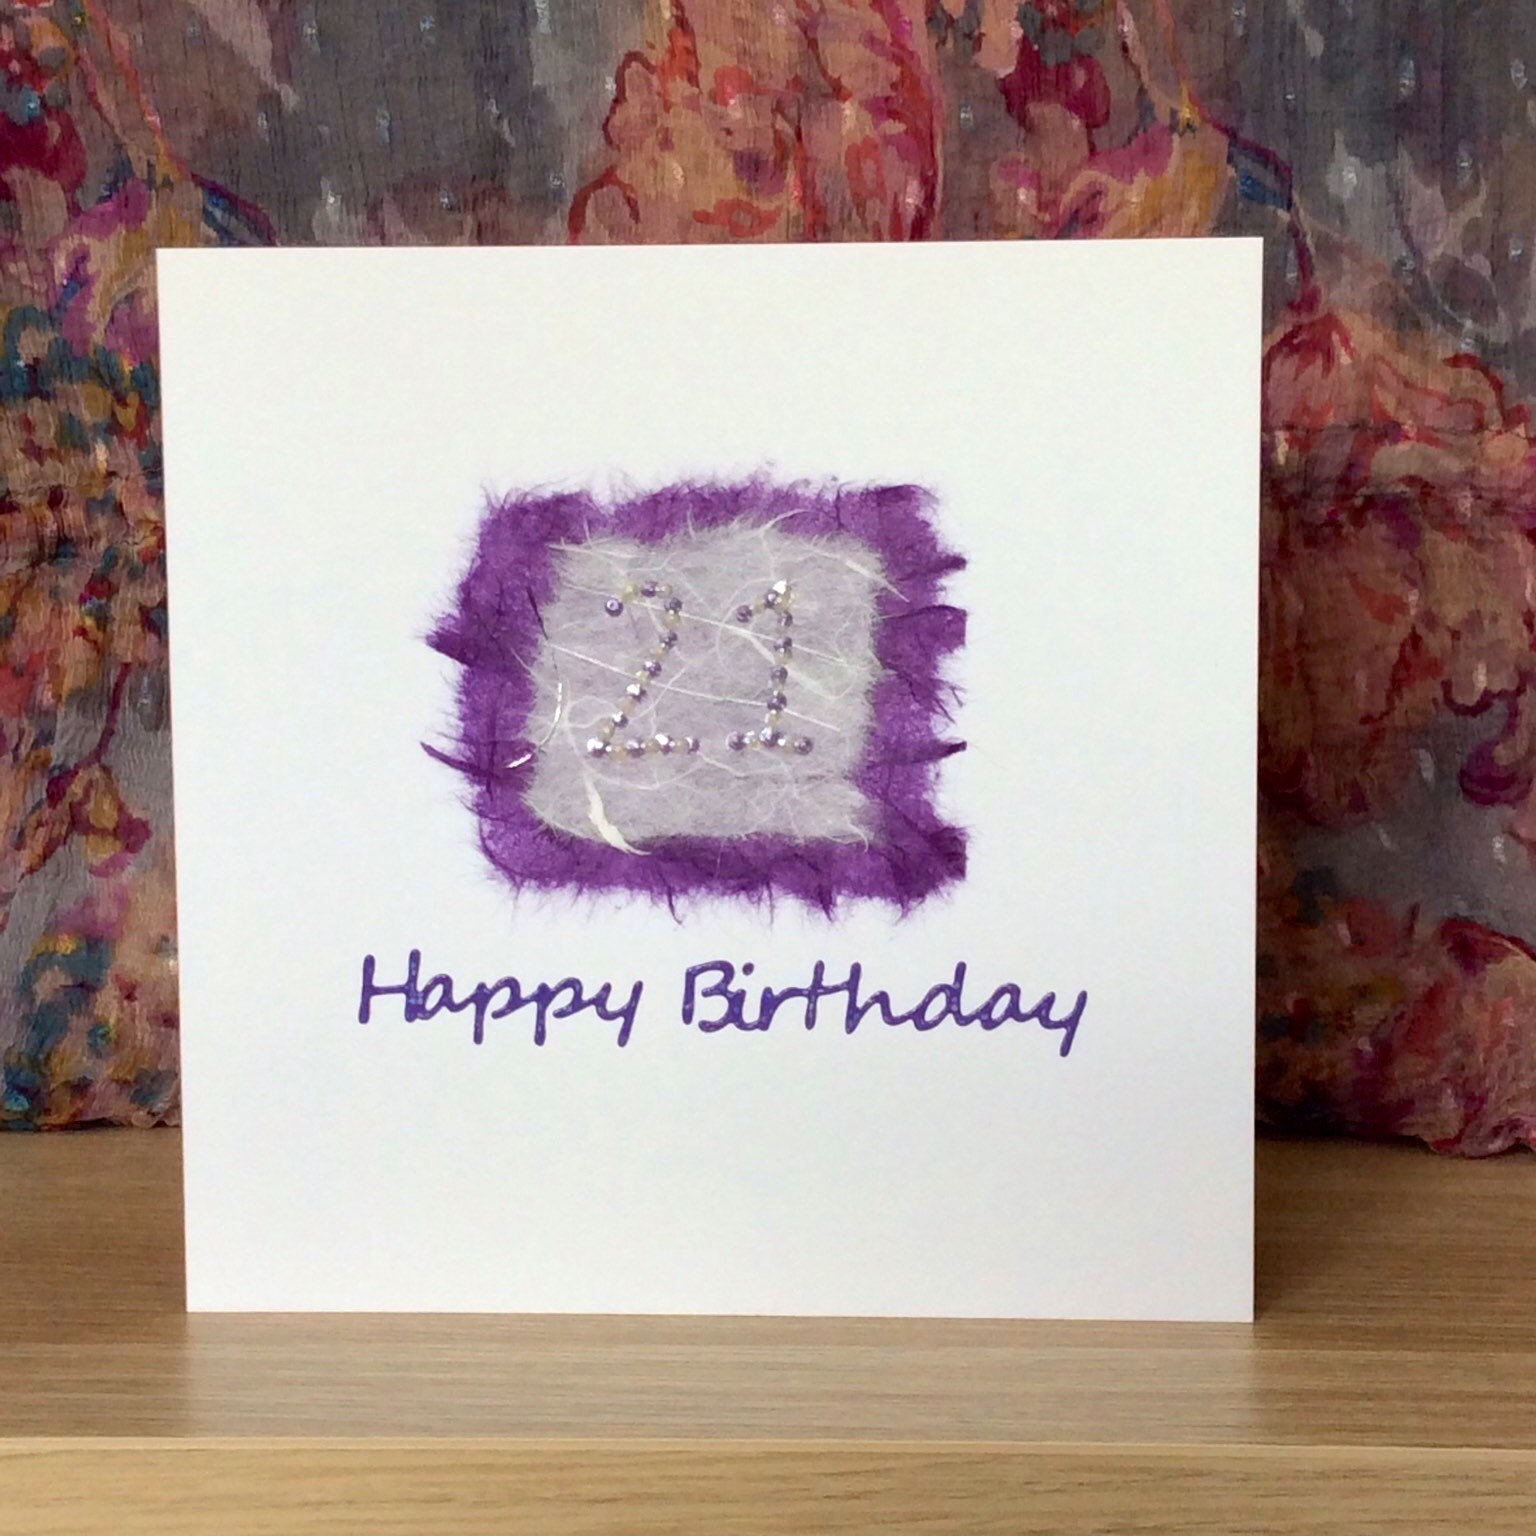 Handmade 21St Birthday Card Ideas Handmade 21st Birthday Cards Shab Chic Style Blue Or Lilac